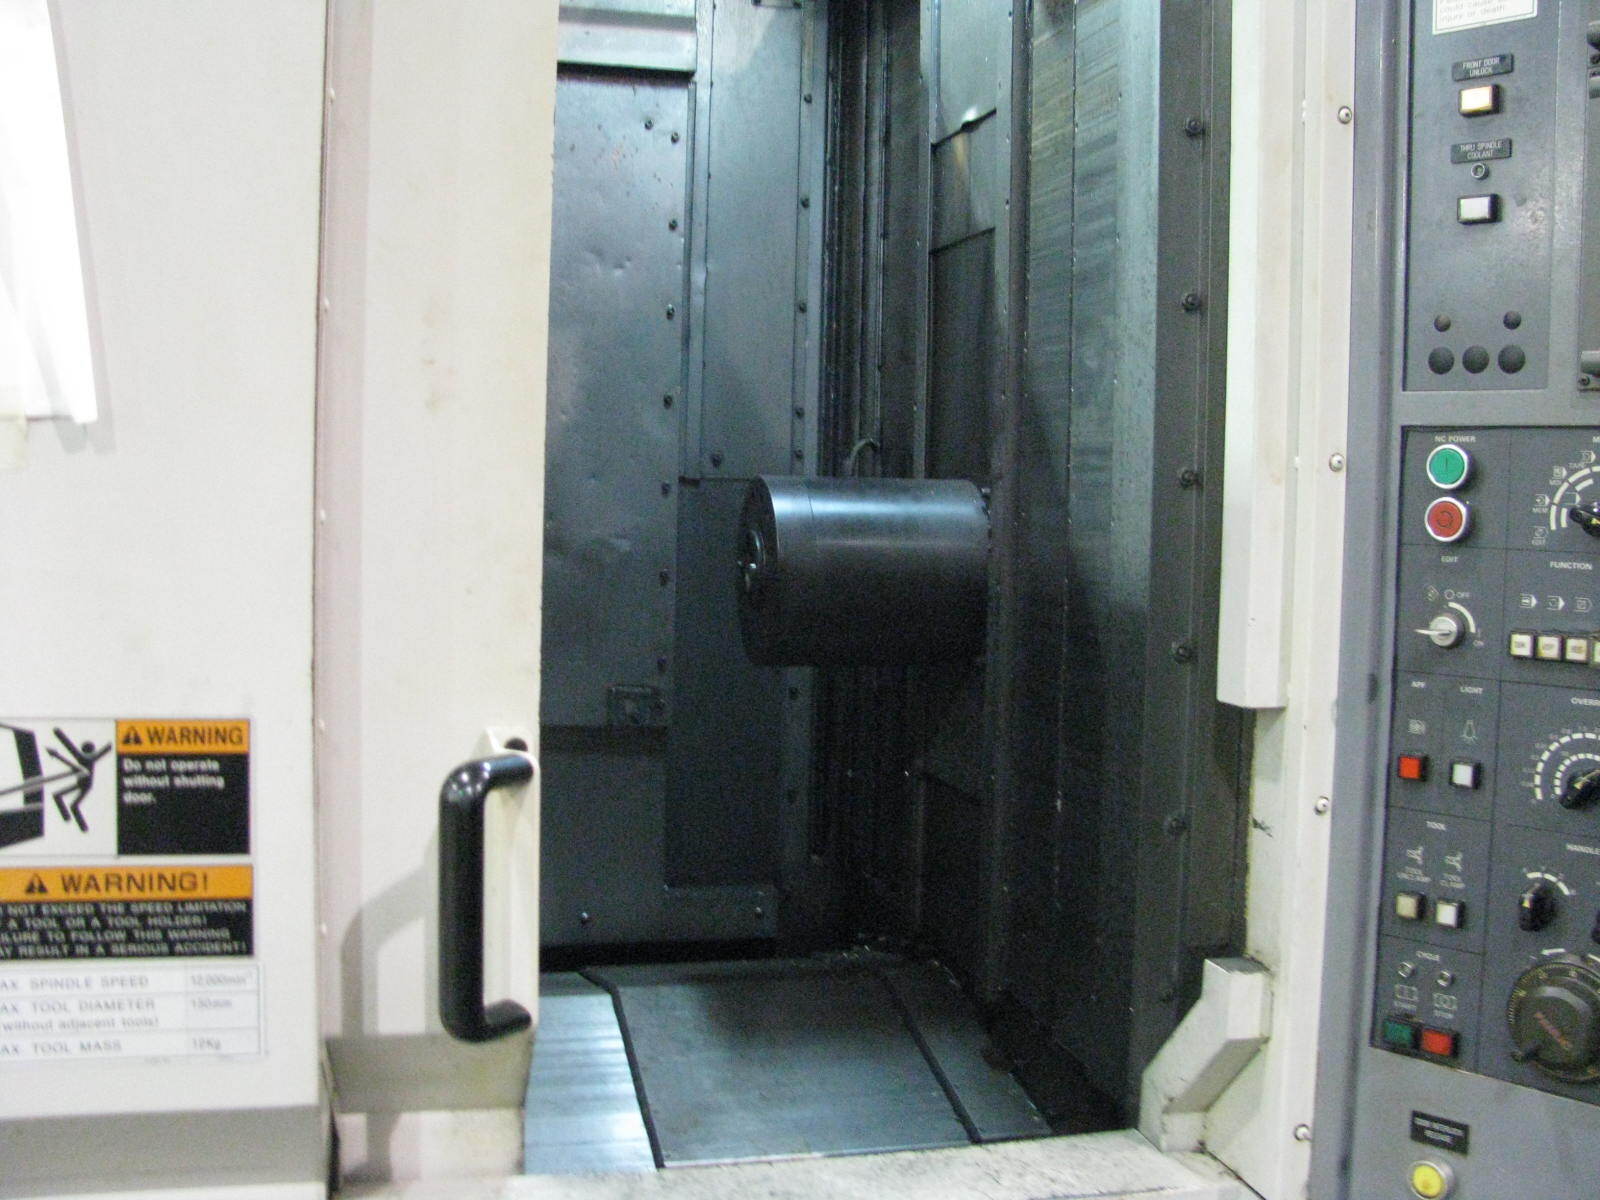 1999 MORI SEIKI SH500 CNC Horizontal Machining Center | Used Machine Hub